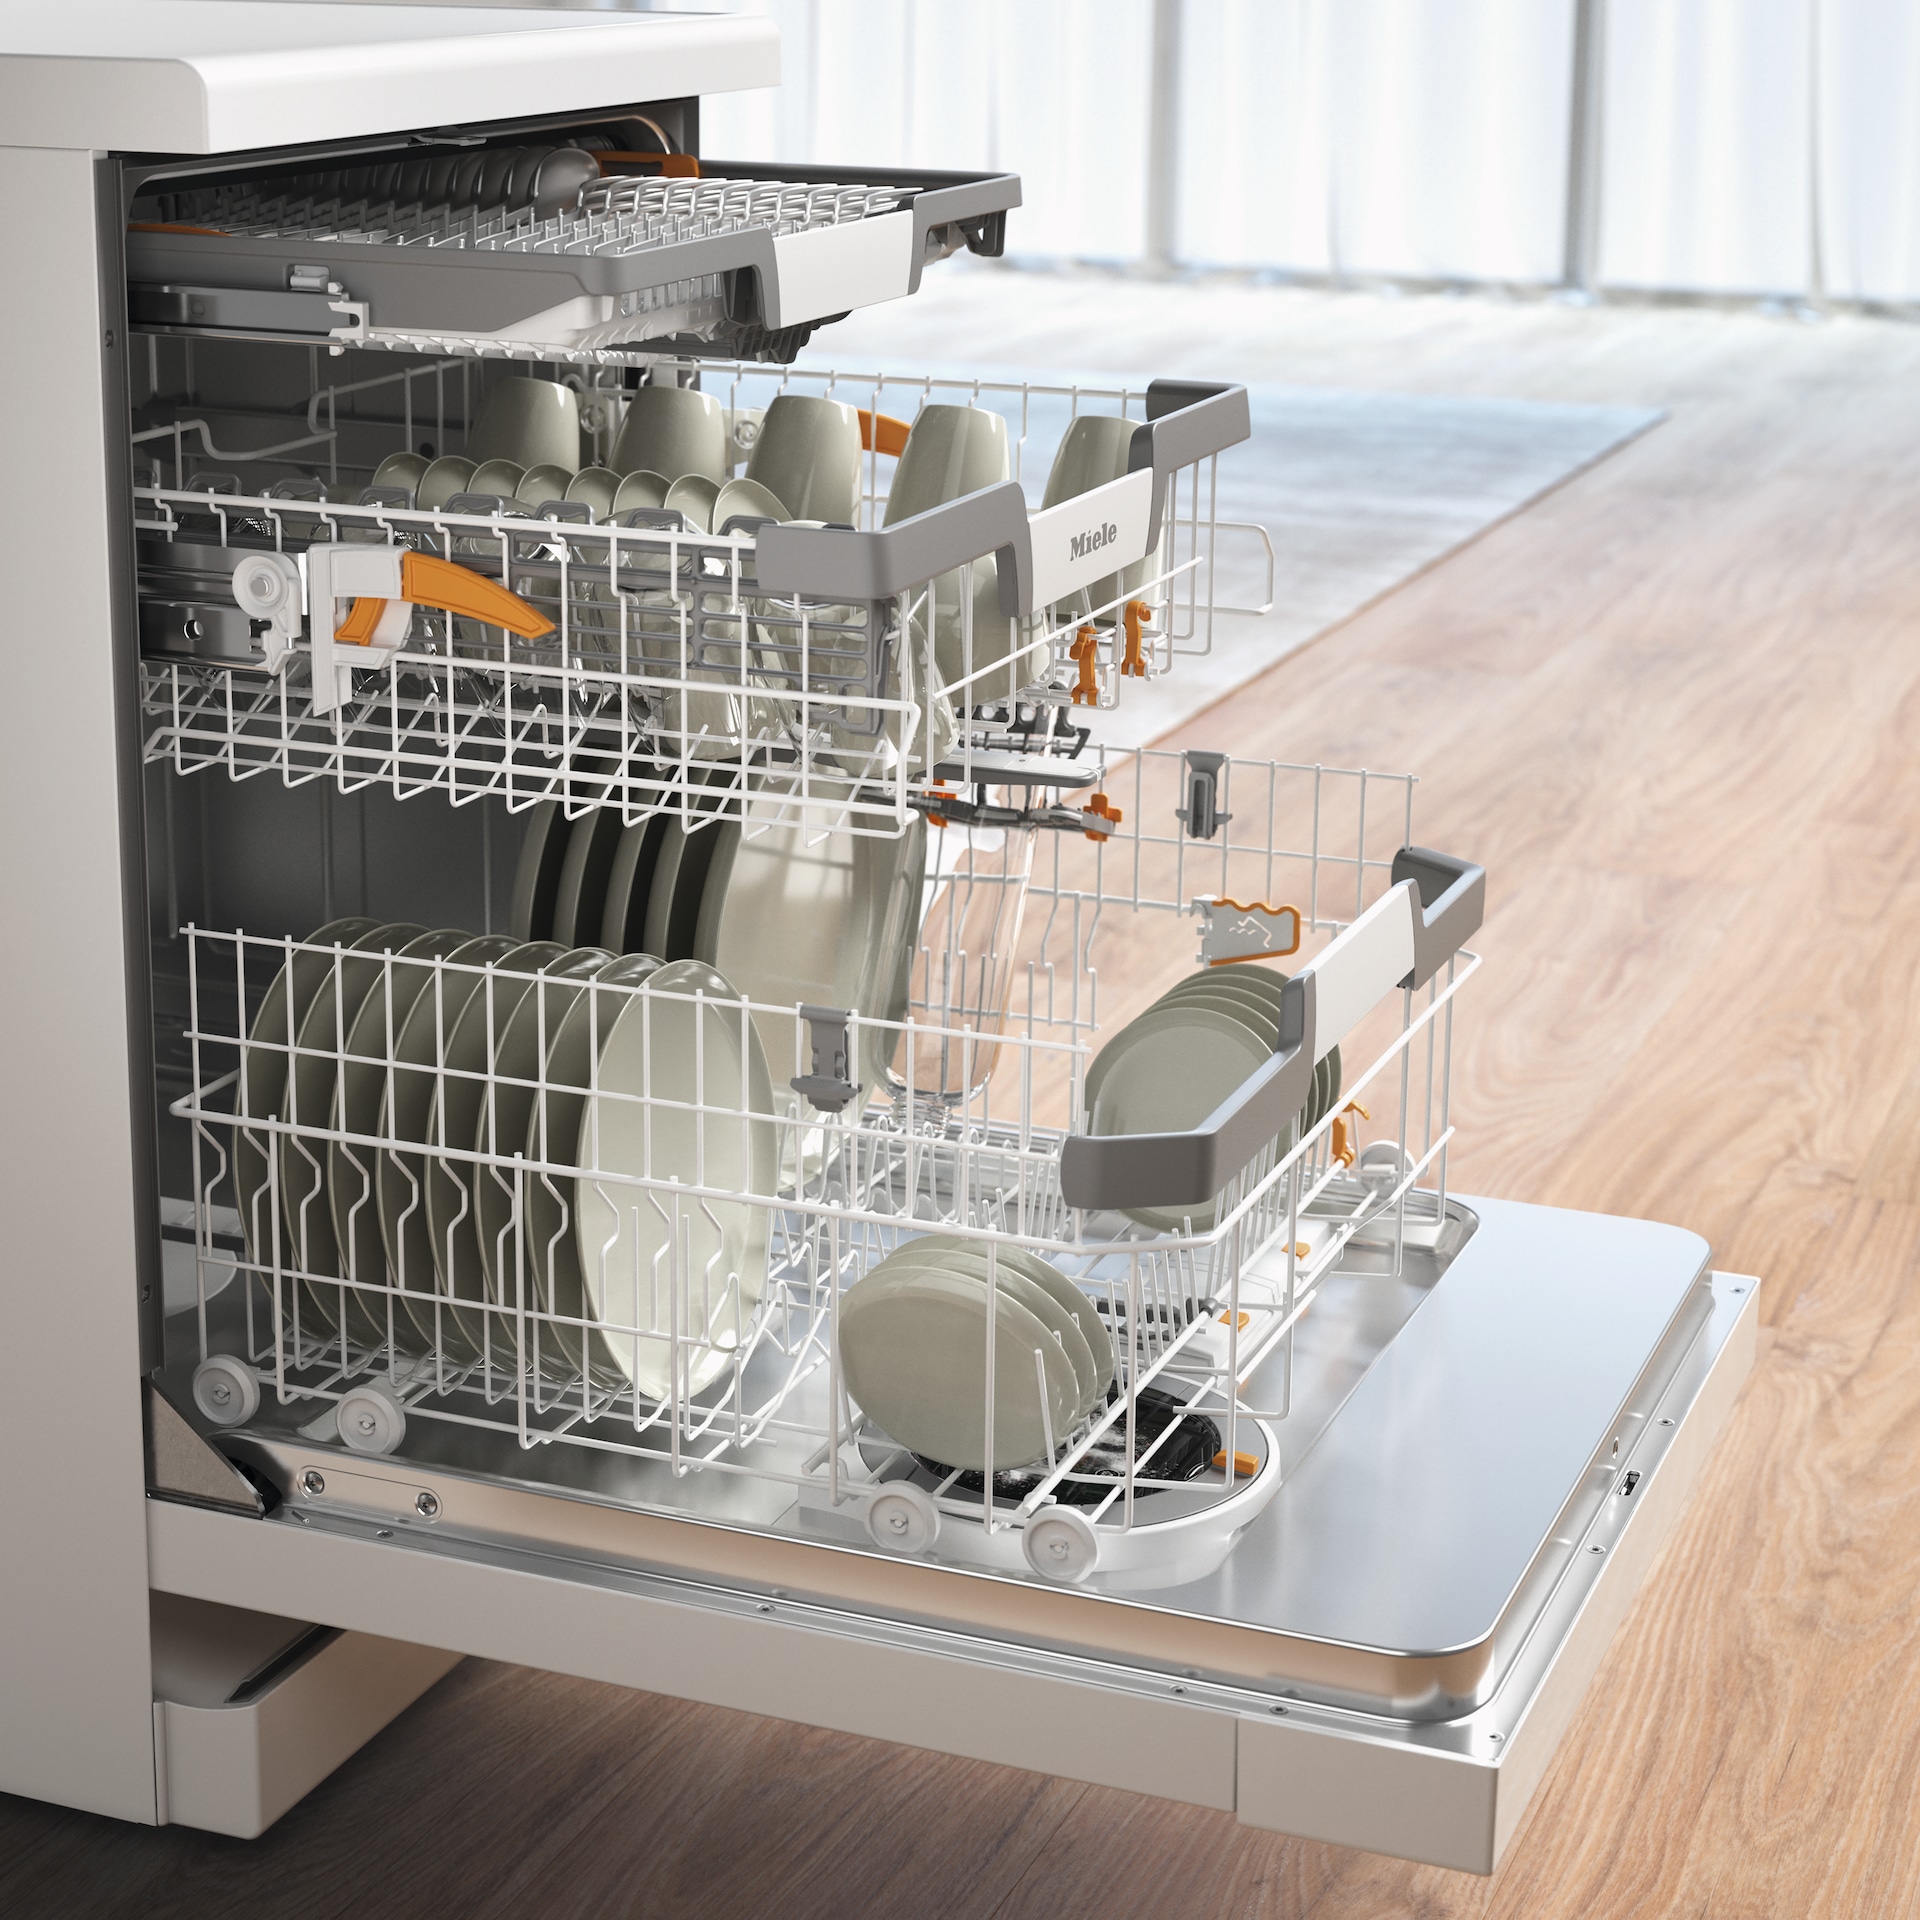 Dishwashers - G 7130 SC AutoDos - 4